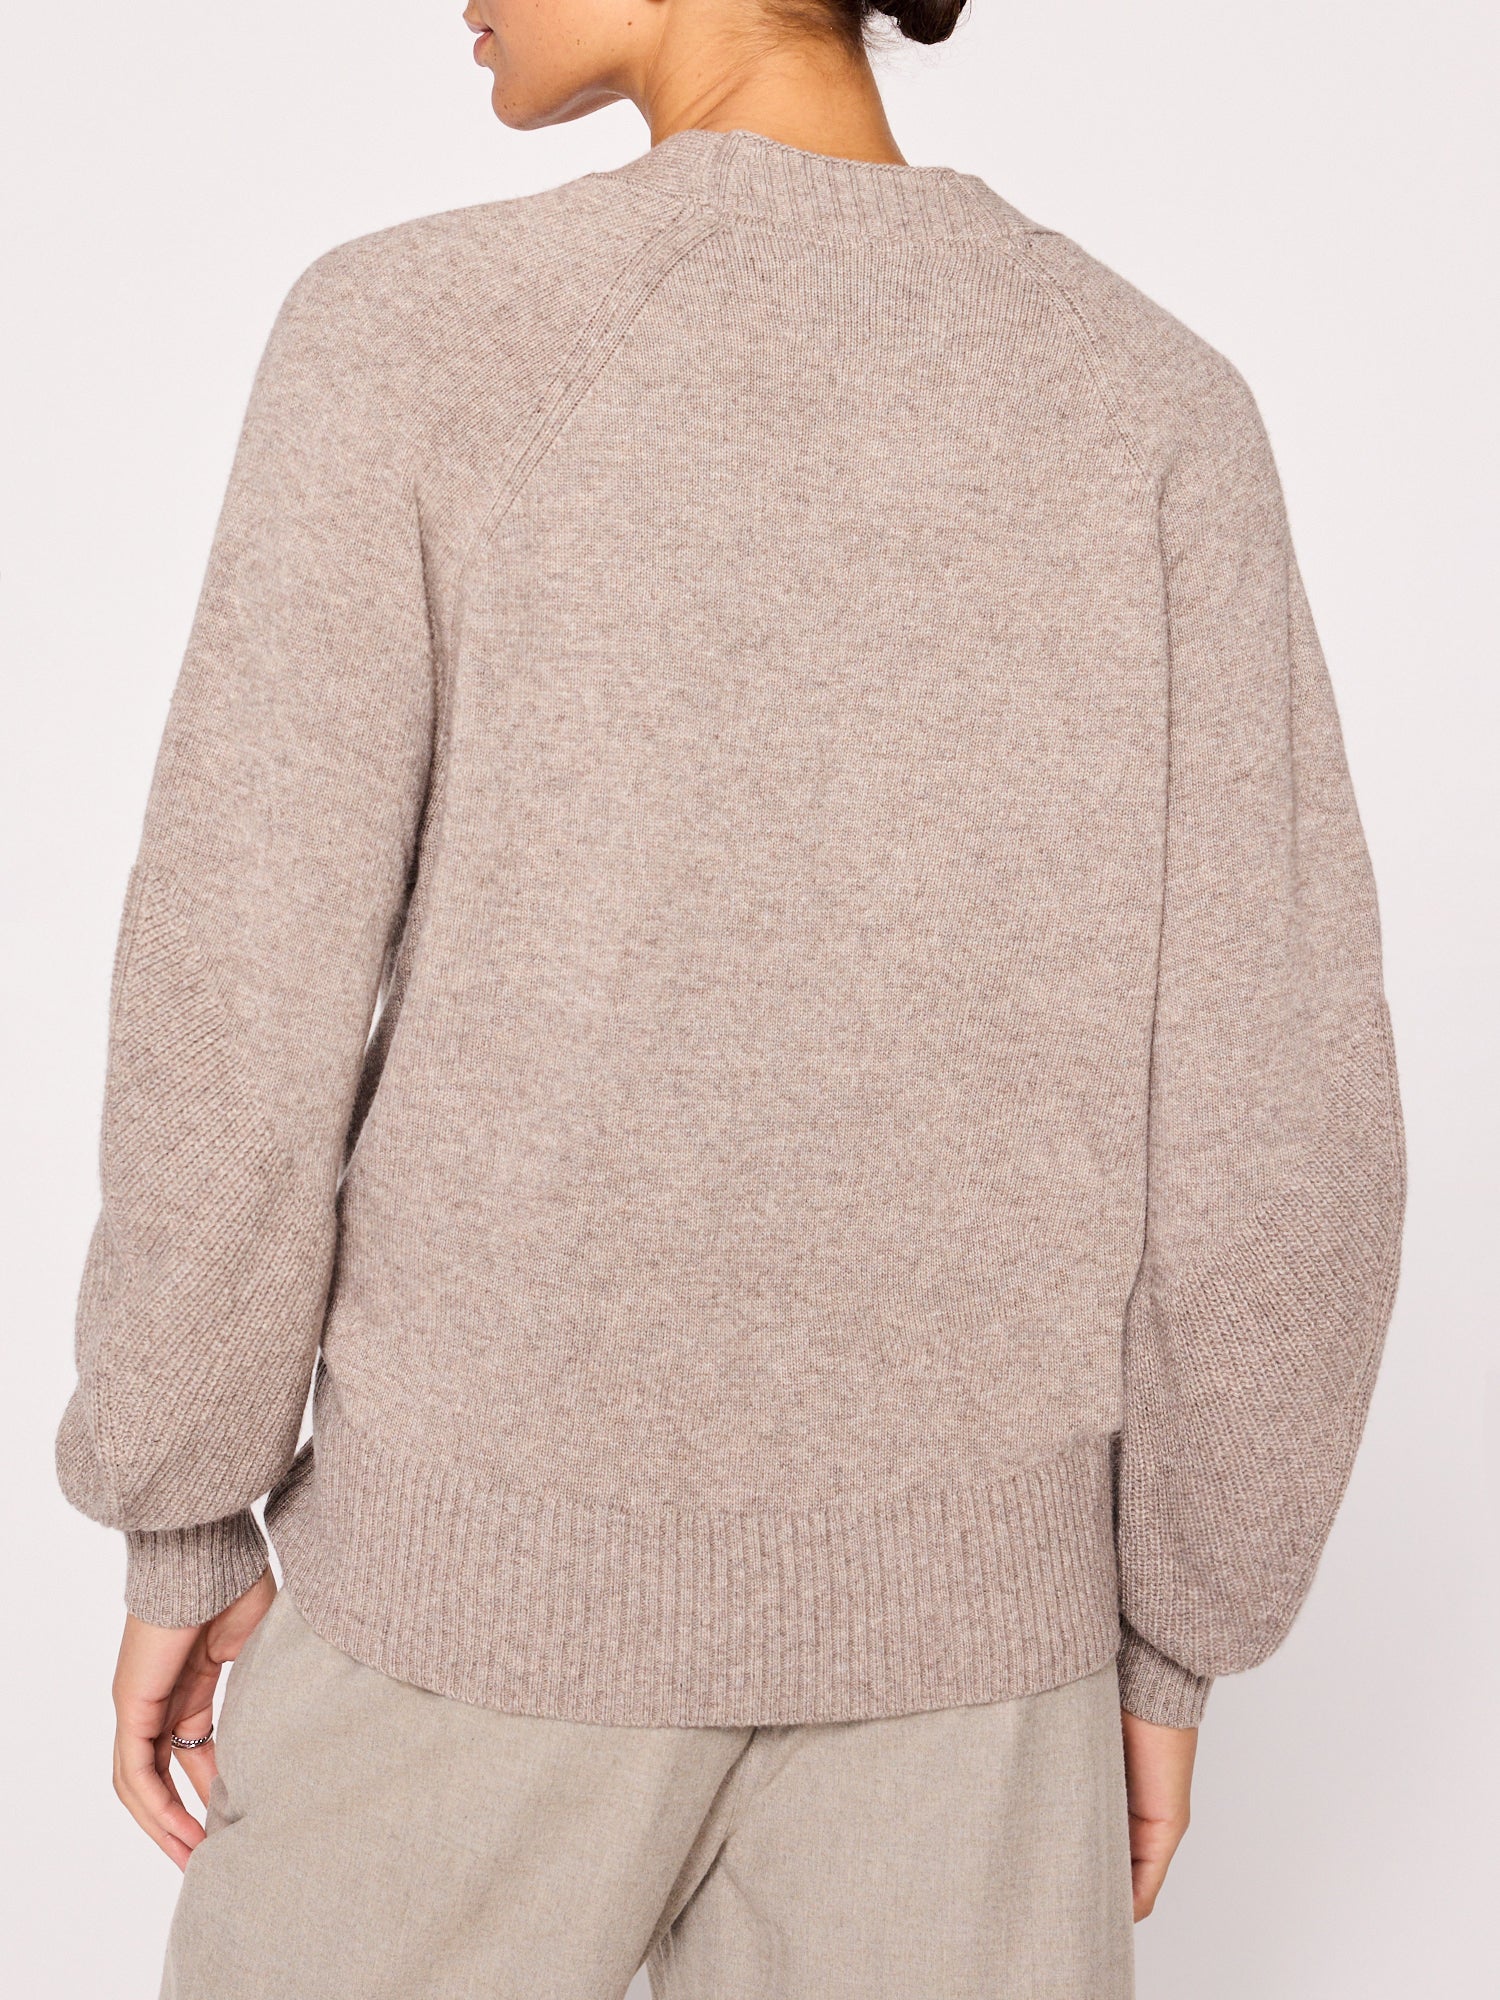 Malia v-neck grey sweater back view